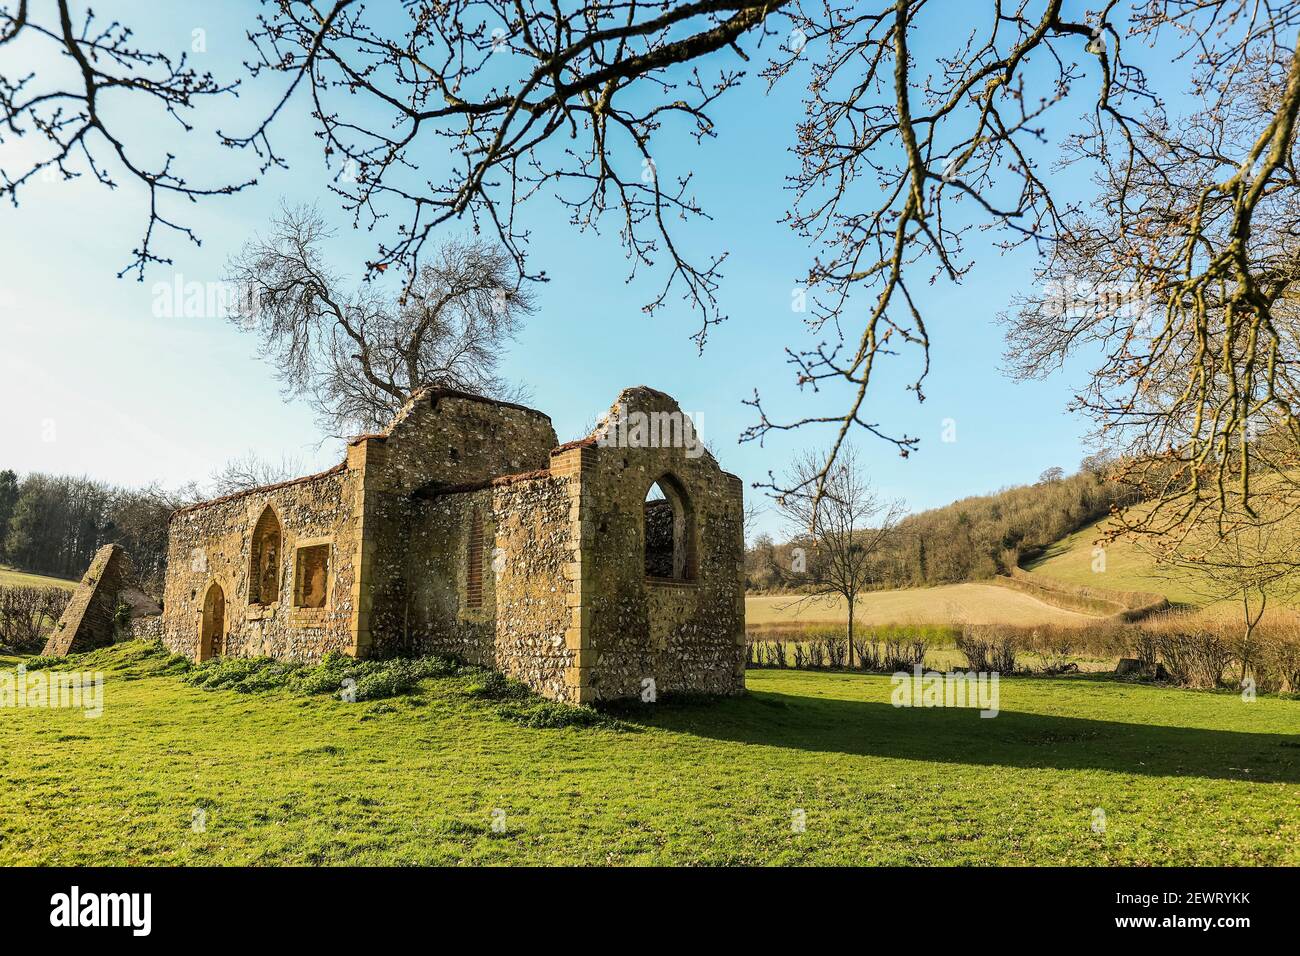 La ruina de la iglesia de San James cerca de Bix, una vez central a Bix Brand, el pueblo medieval perdido, Bix, Henley-on-Thames, Oxfordshire, Inglaterra, Reino Unido Foto de stock